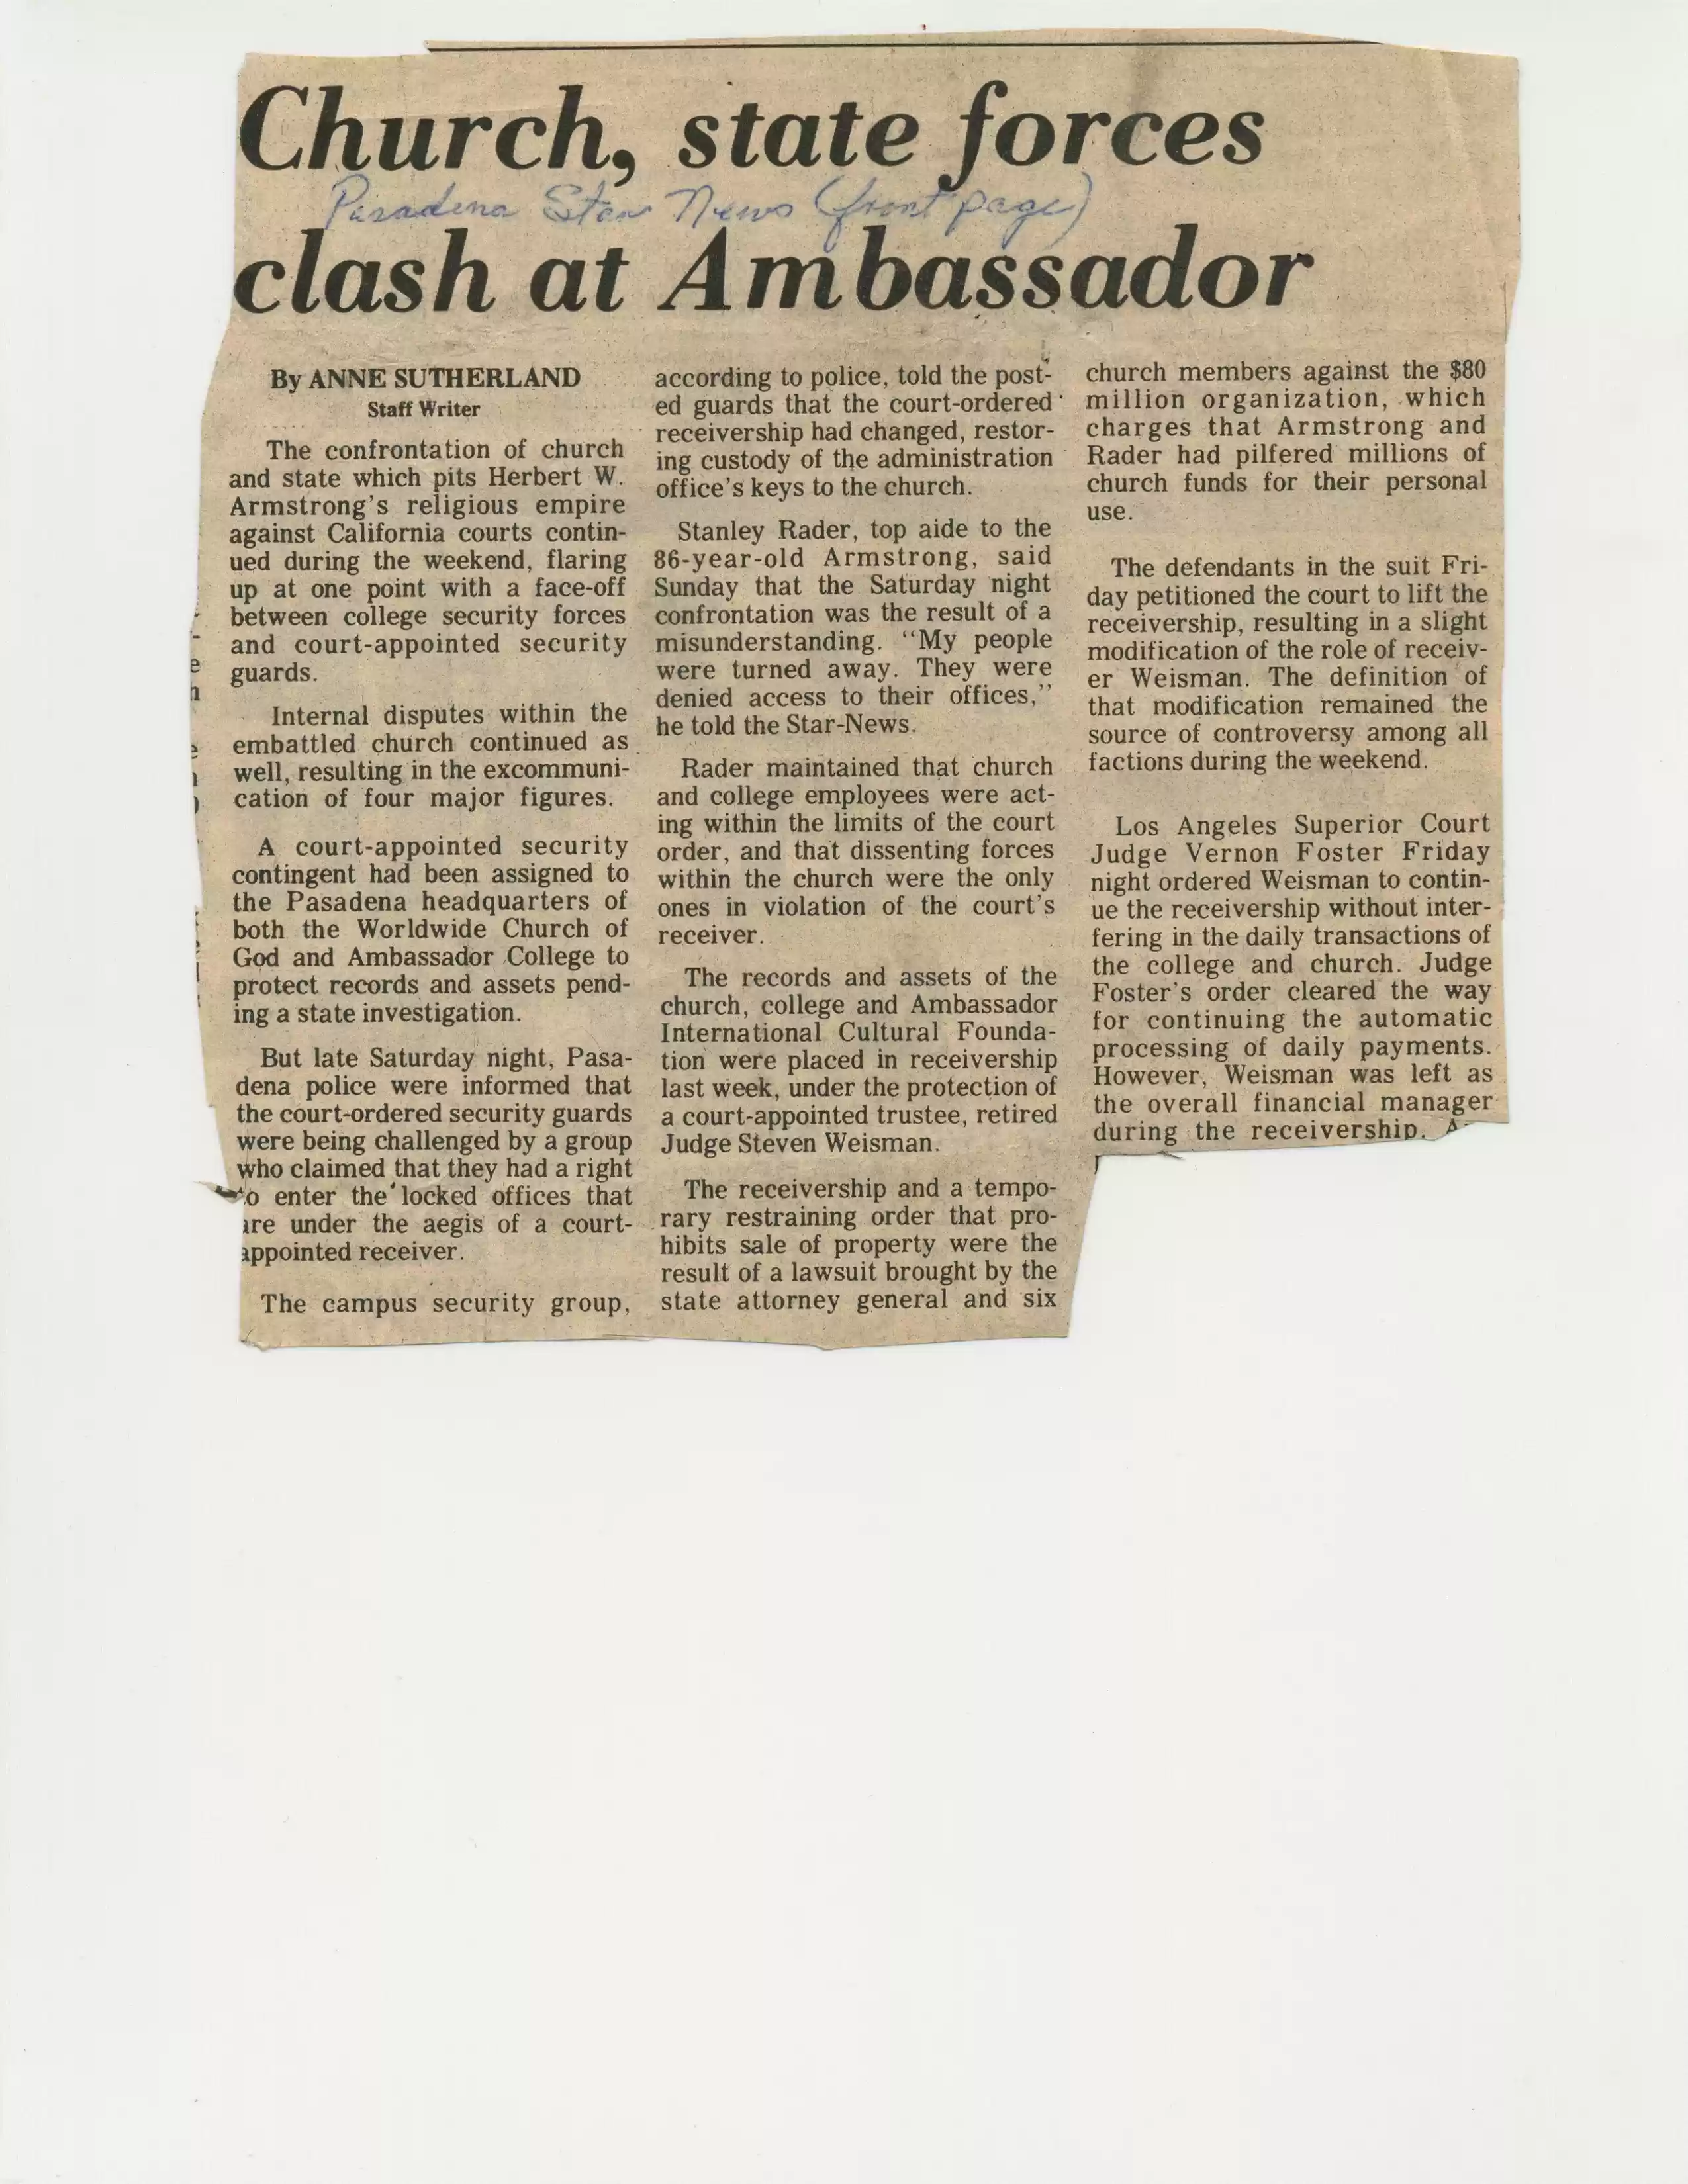 Pasadena Star News, n.d., partial article, prob 1-1979